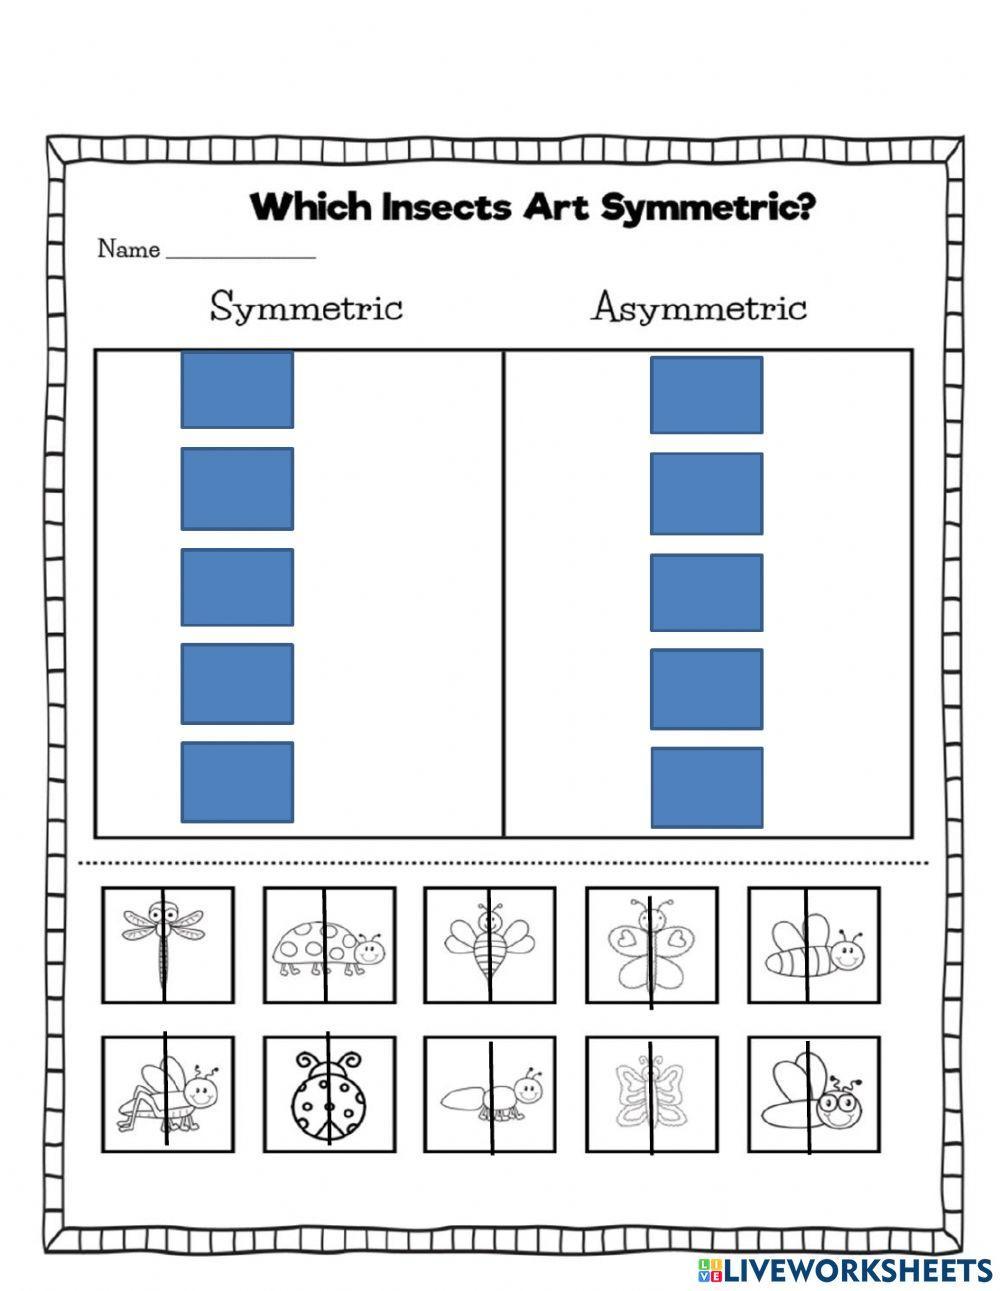 Symmetrical sort